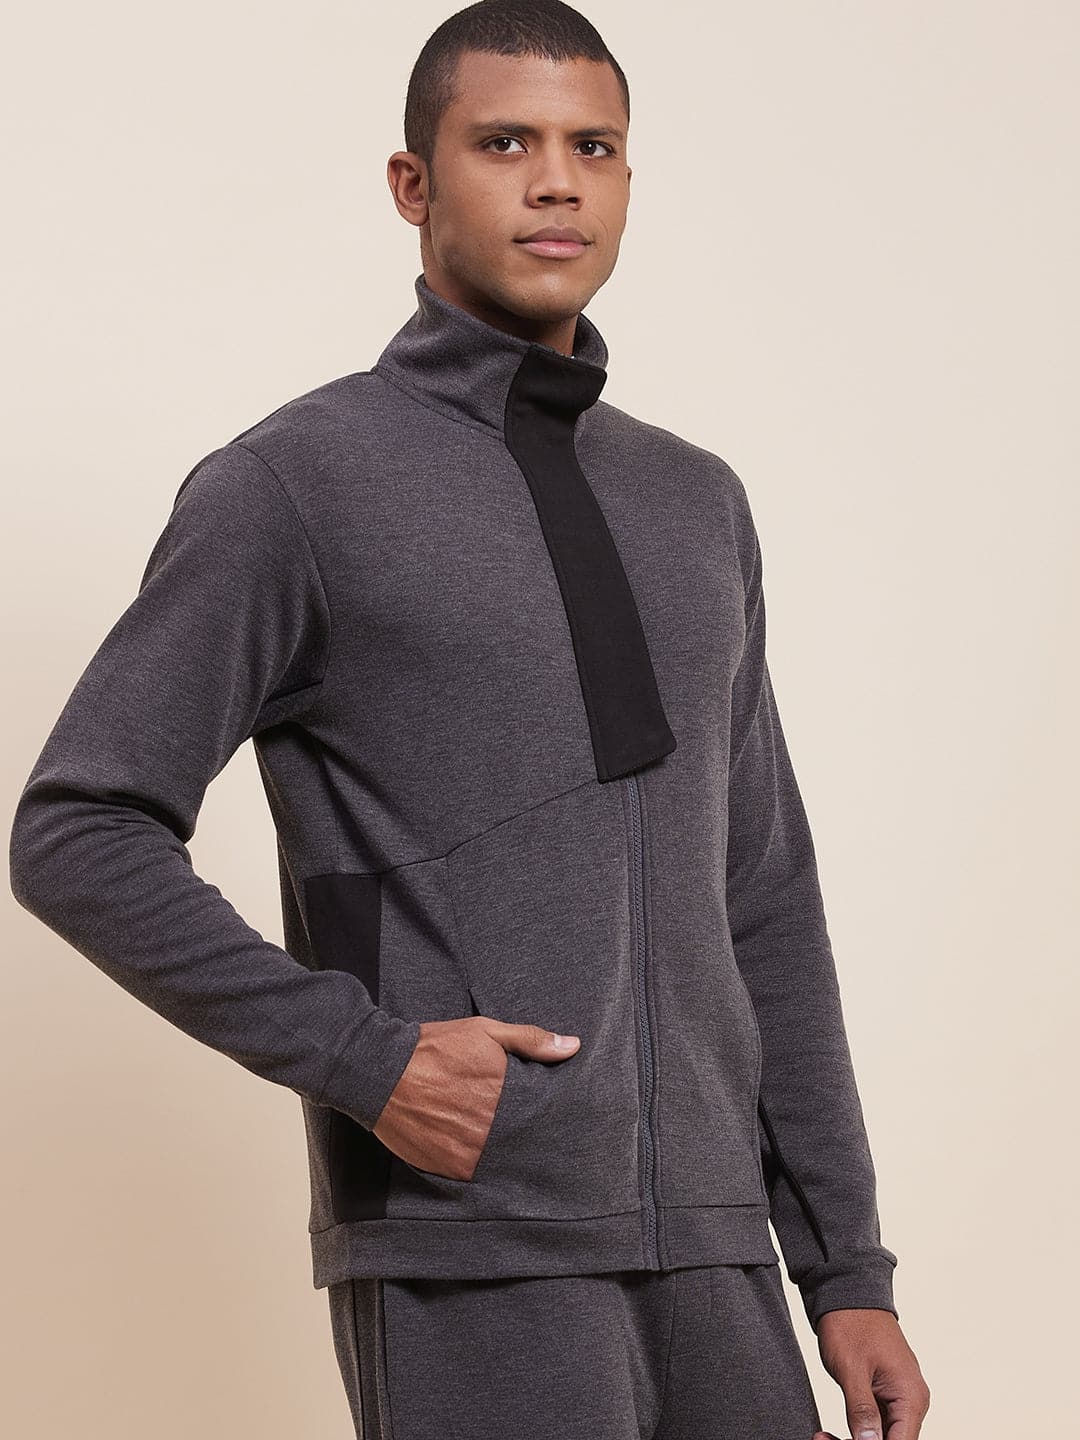 Men's Grey Melange High Neck Contrast Flap Jacket - LYUSH-MASCLN